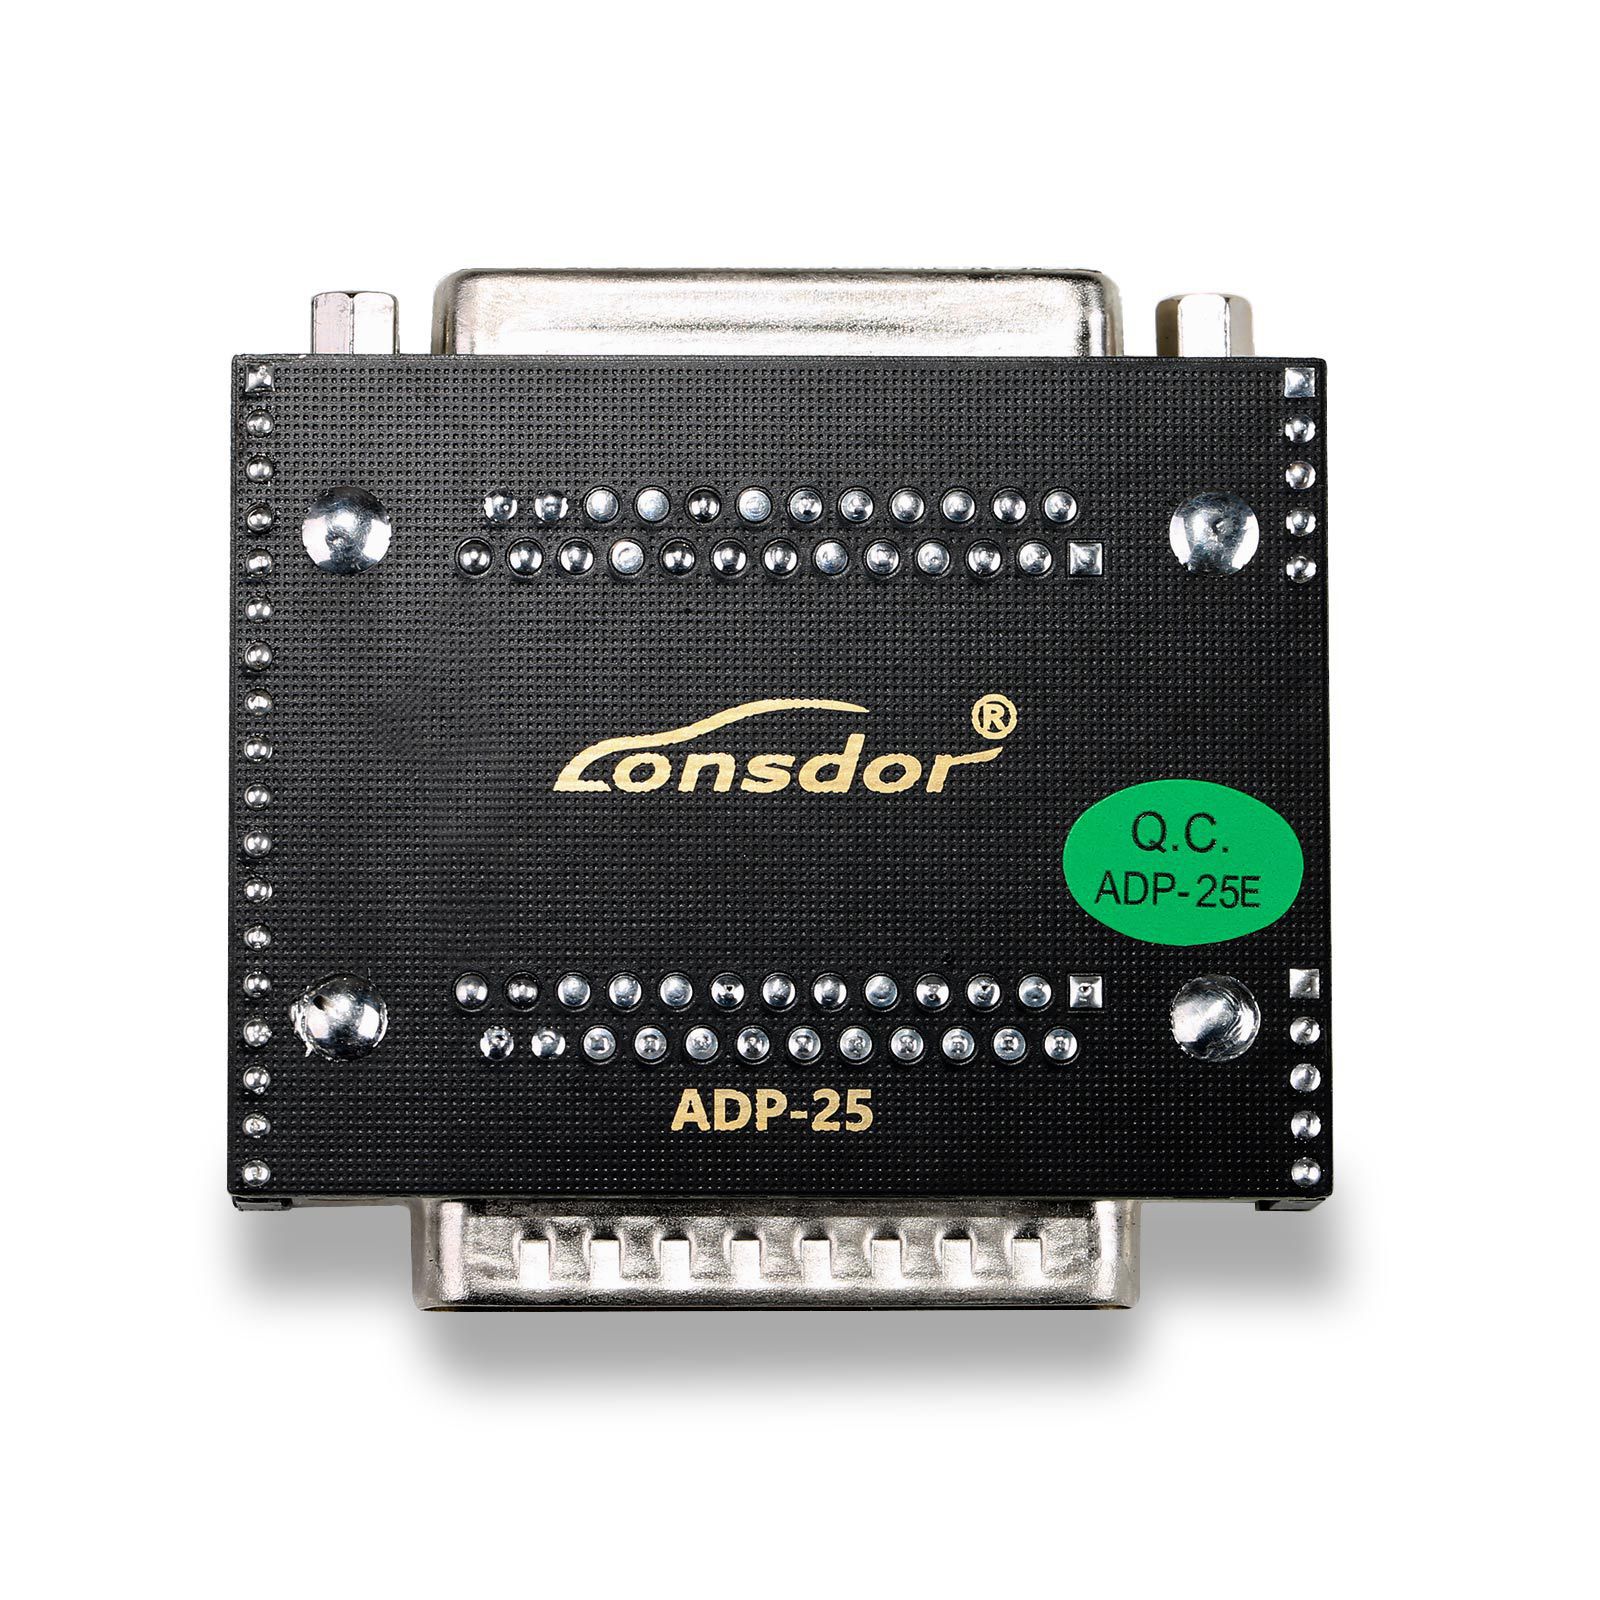 Lonsdor K518ISE Programmer Plus LKE Emulator und Super ADP 8A/4A Adapter